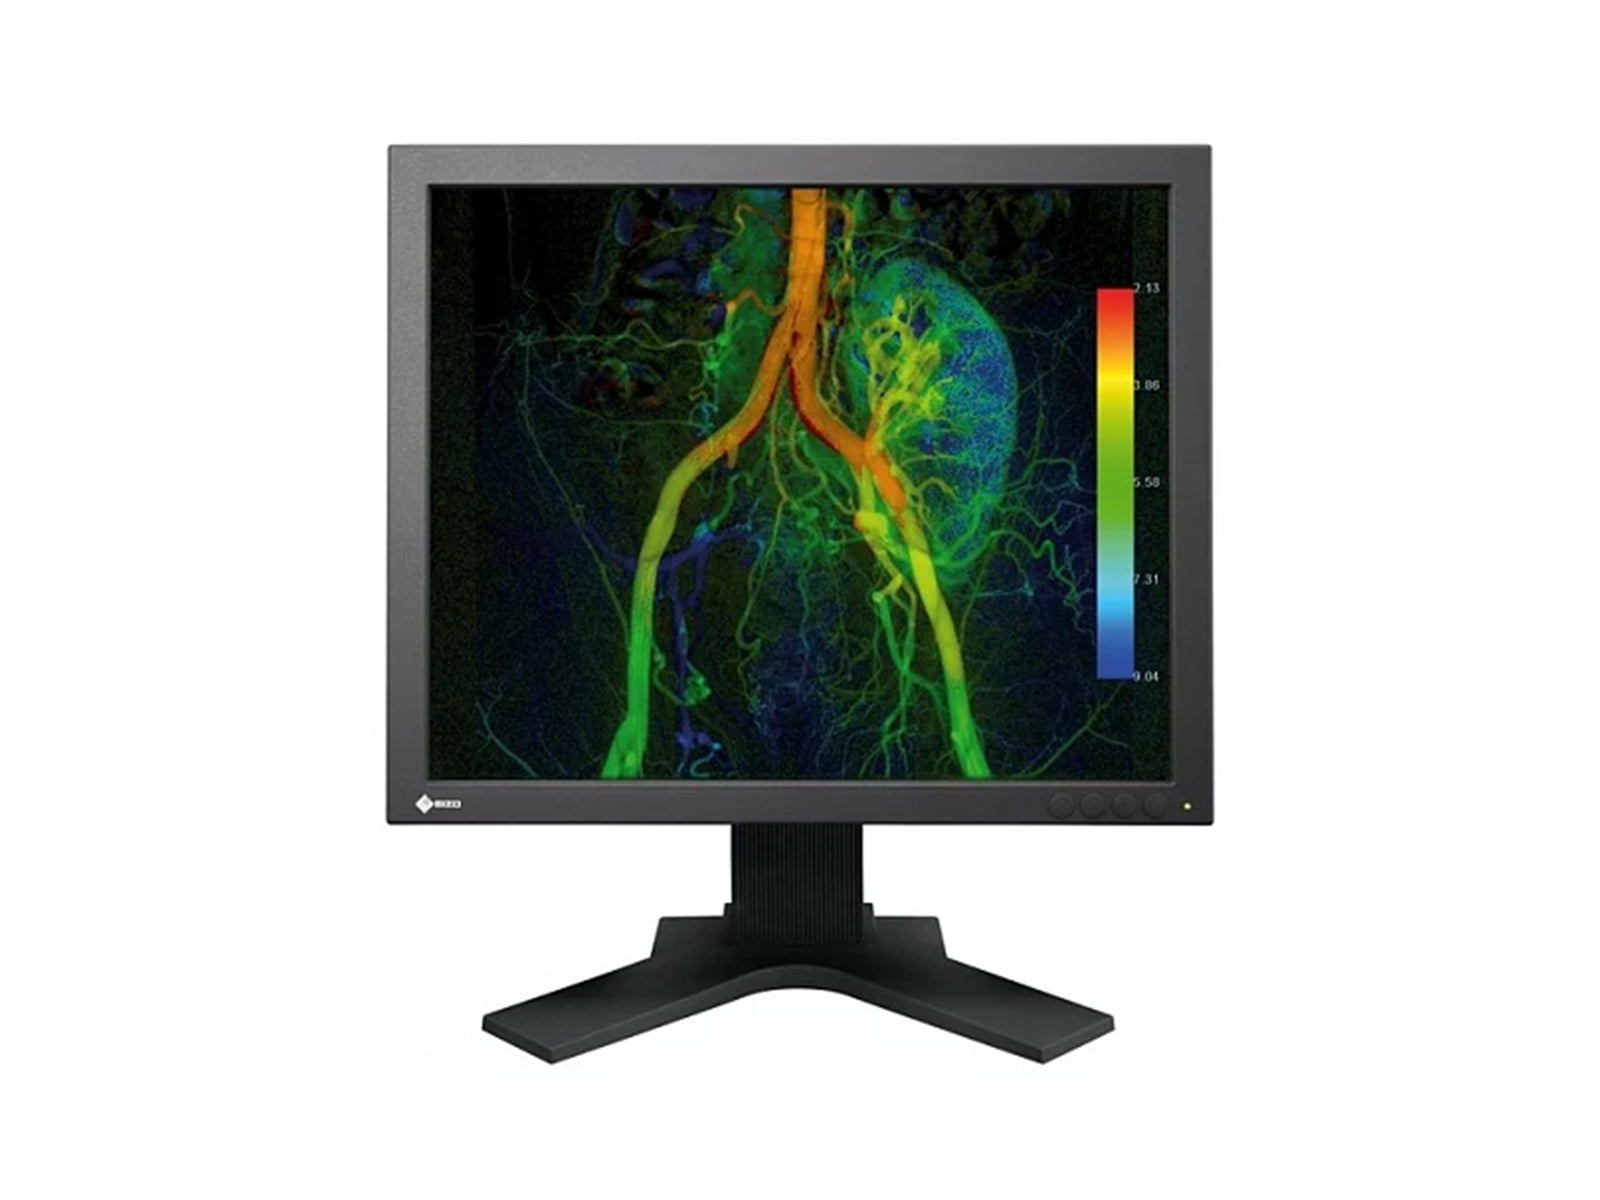 Eizo CuratOR EX190 1MP 19" LCD Color Surgical Medical Display Monitor (EX190-S) Monitors.com 